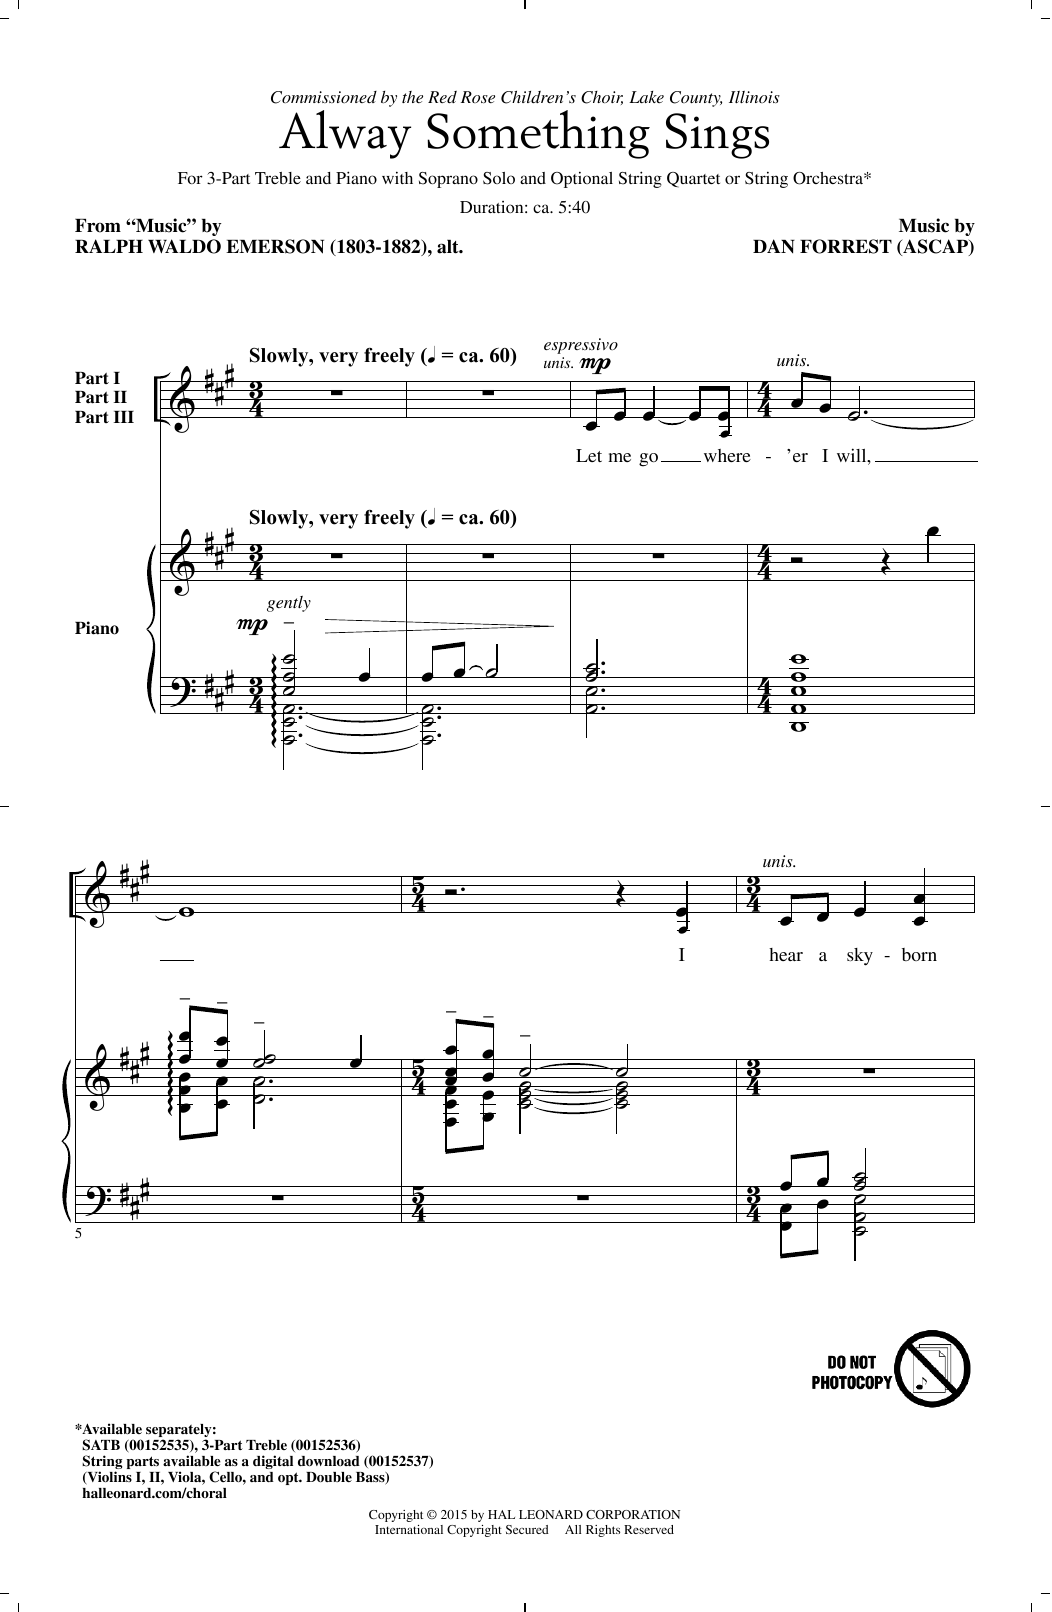 Dan Forrest Alway Something Sings Sheet Music Notes & Chords for TTBB - Download or Print PDF